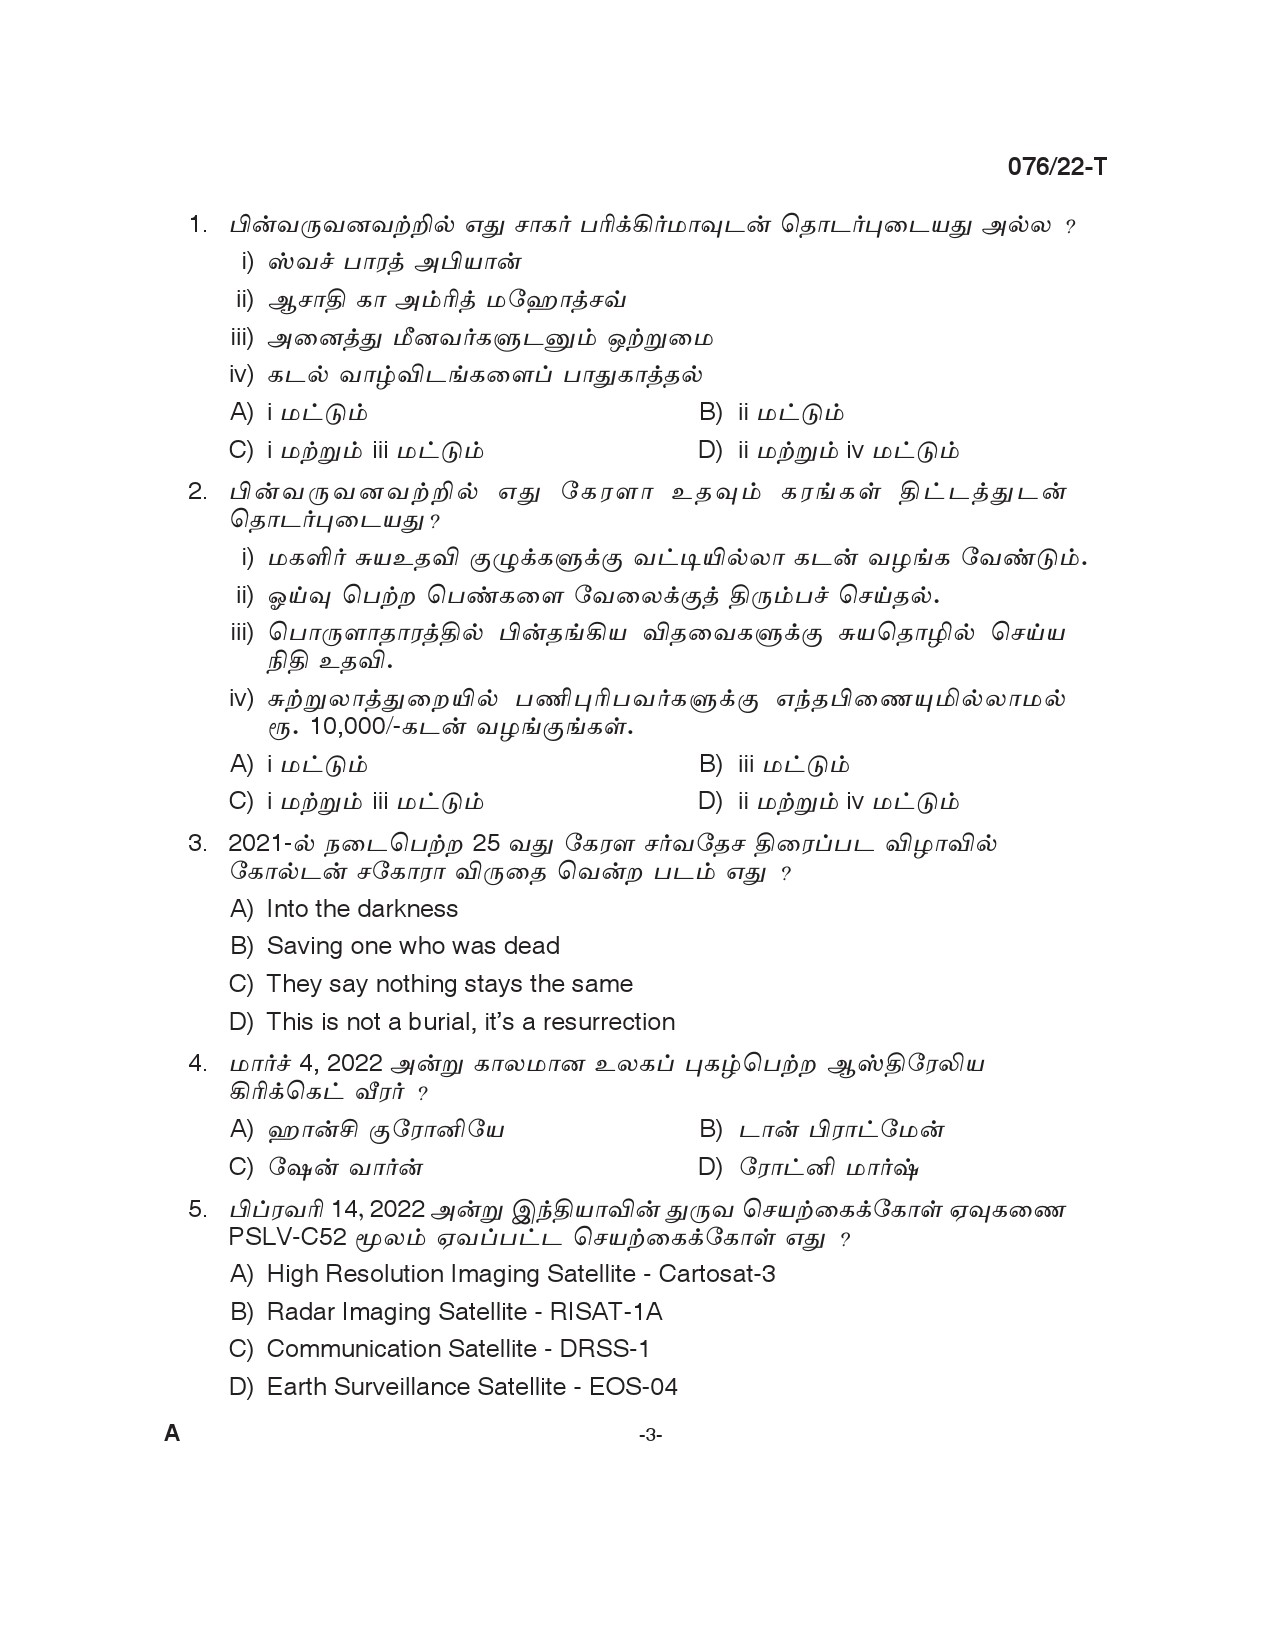 Common Preliminary Exam 2022 Upto SSLC Level Stage V Tamil 0762022 T 2